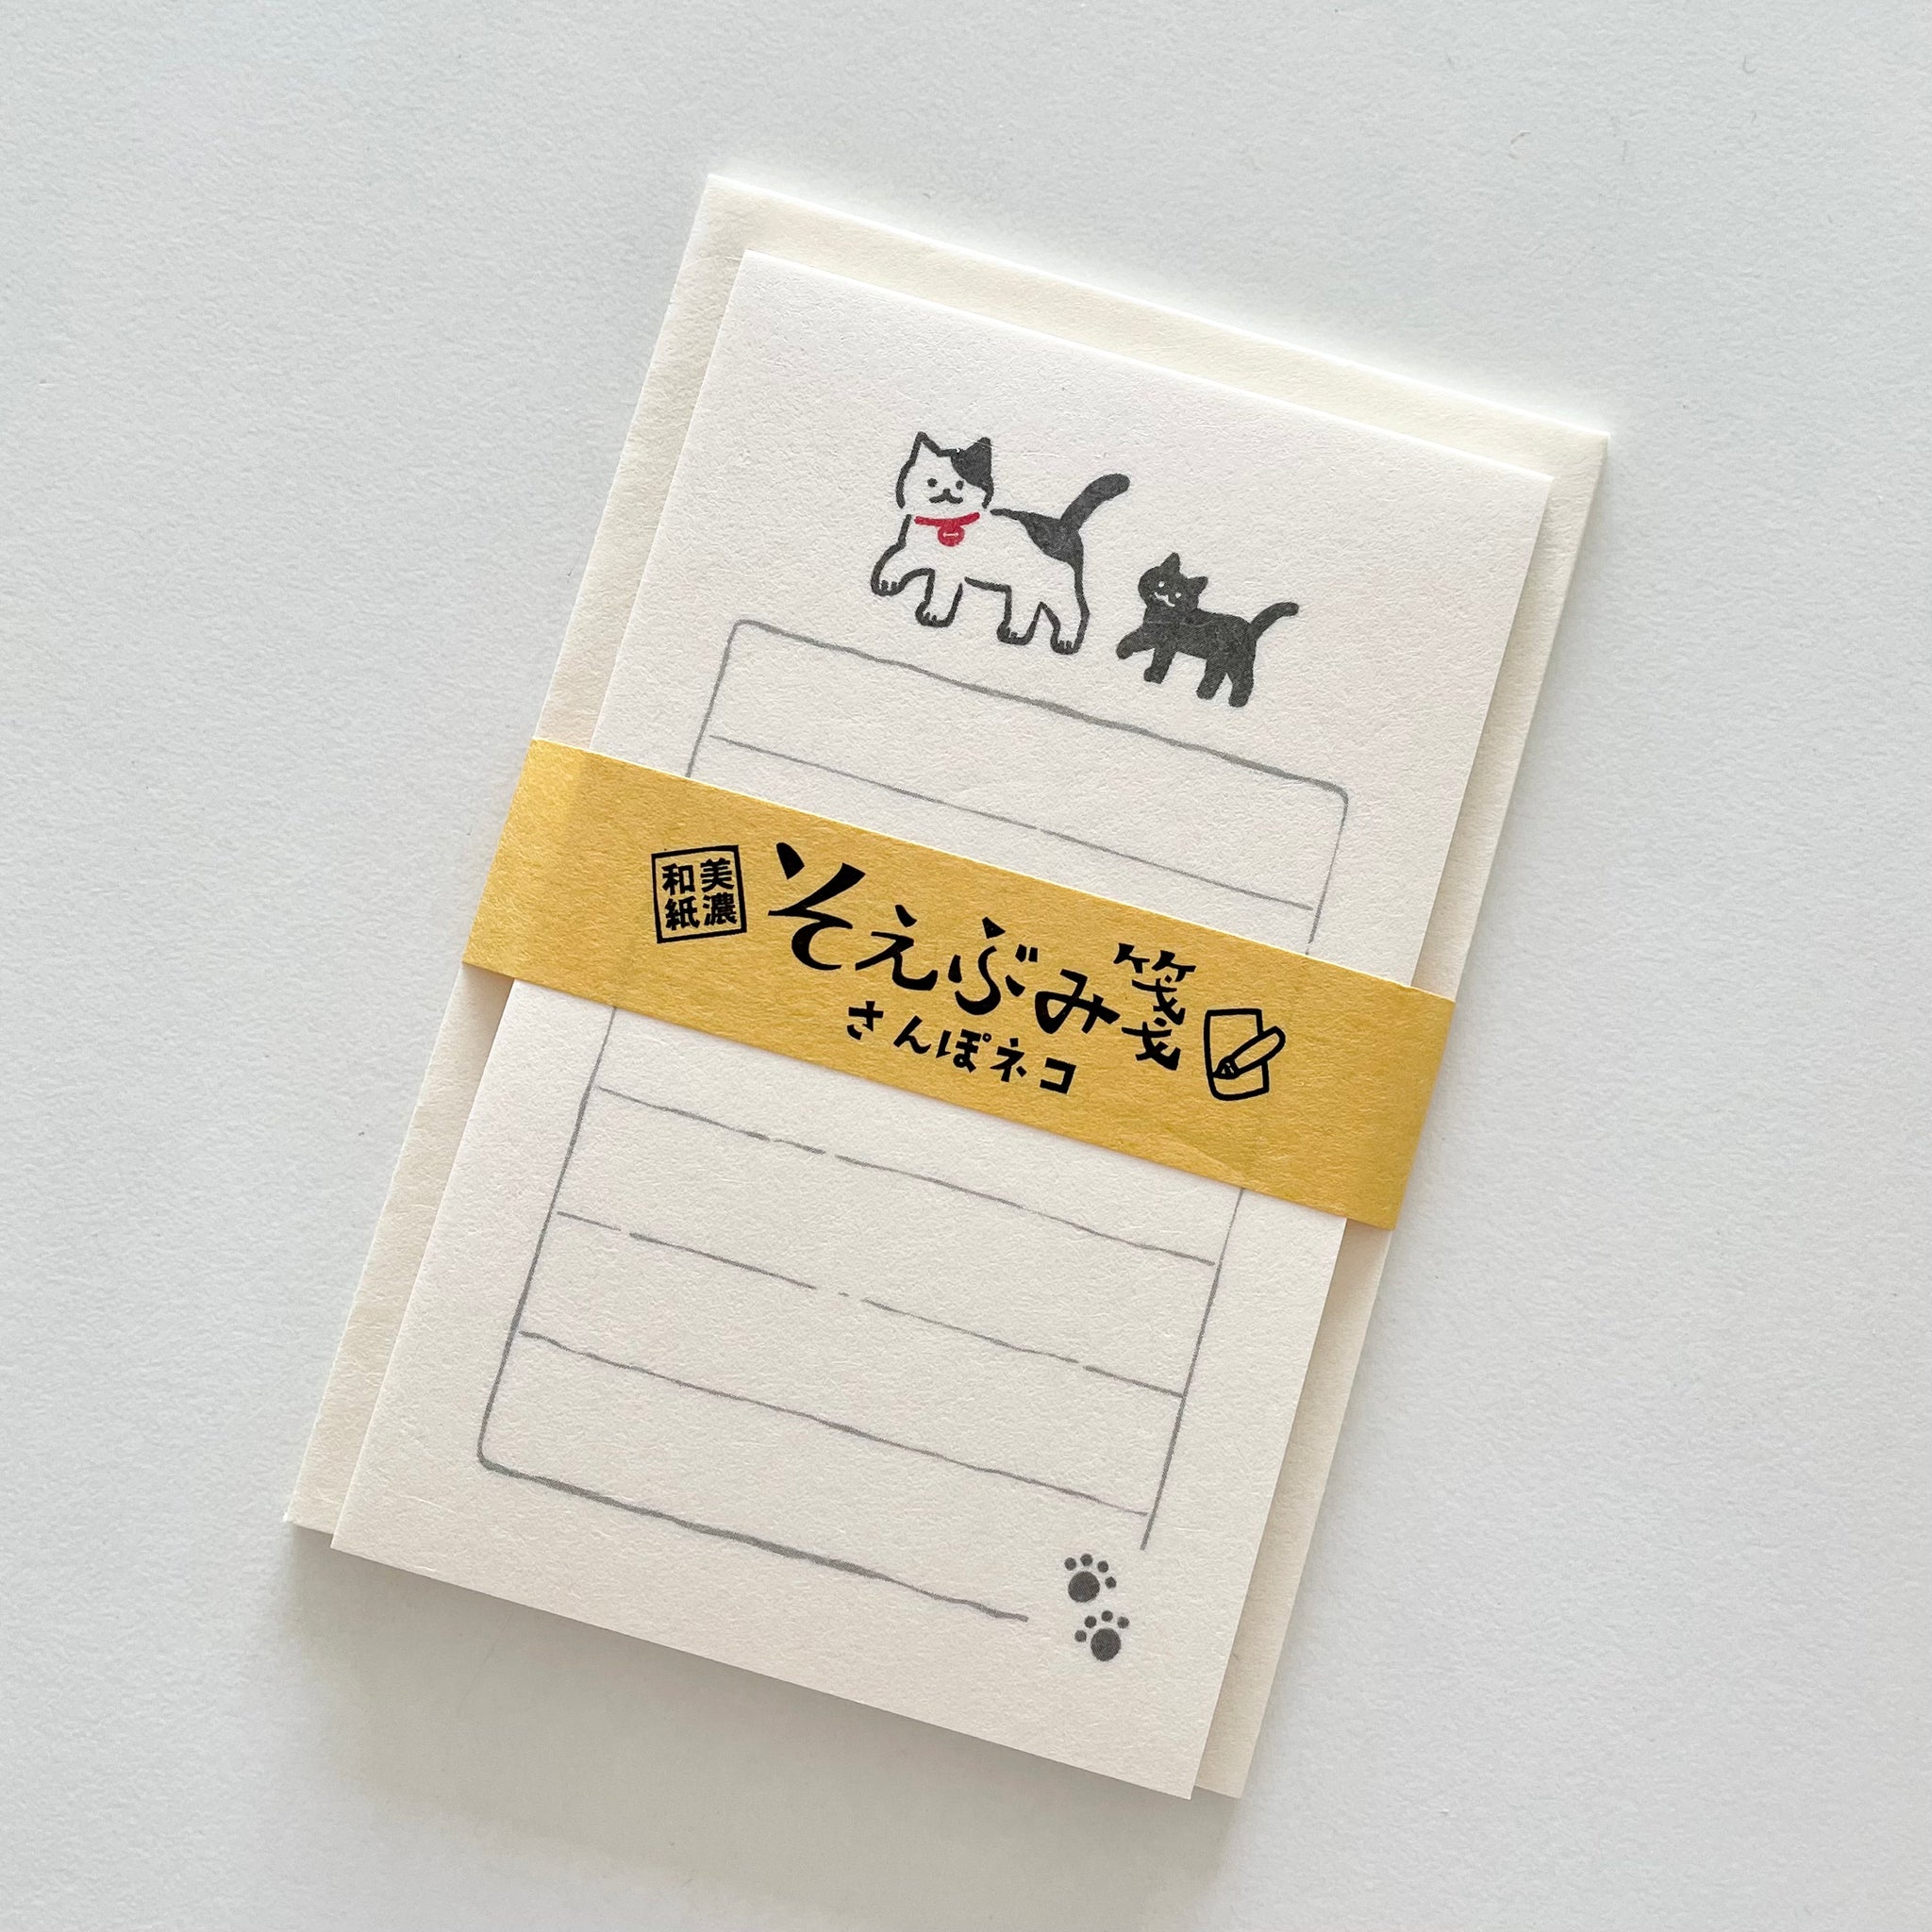 Furukawashiko Mini Letter Set - Wondering Cats